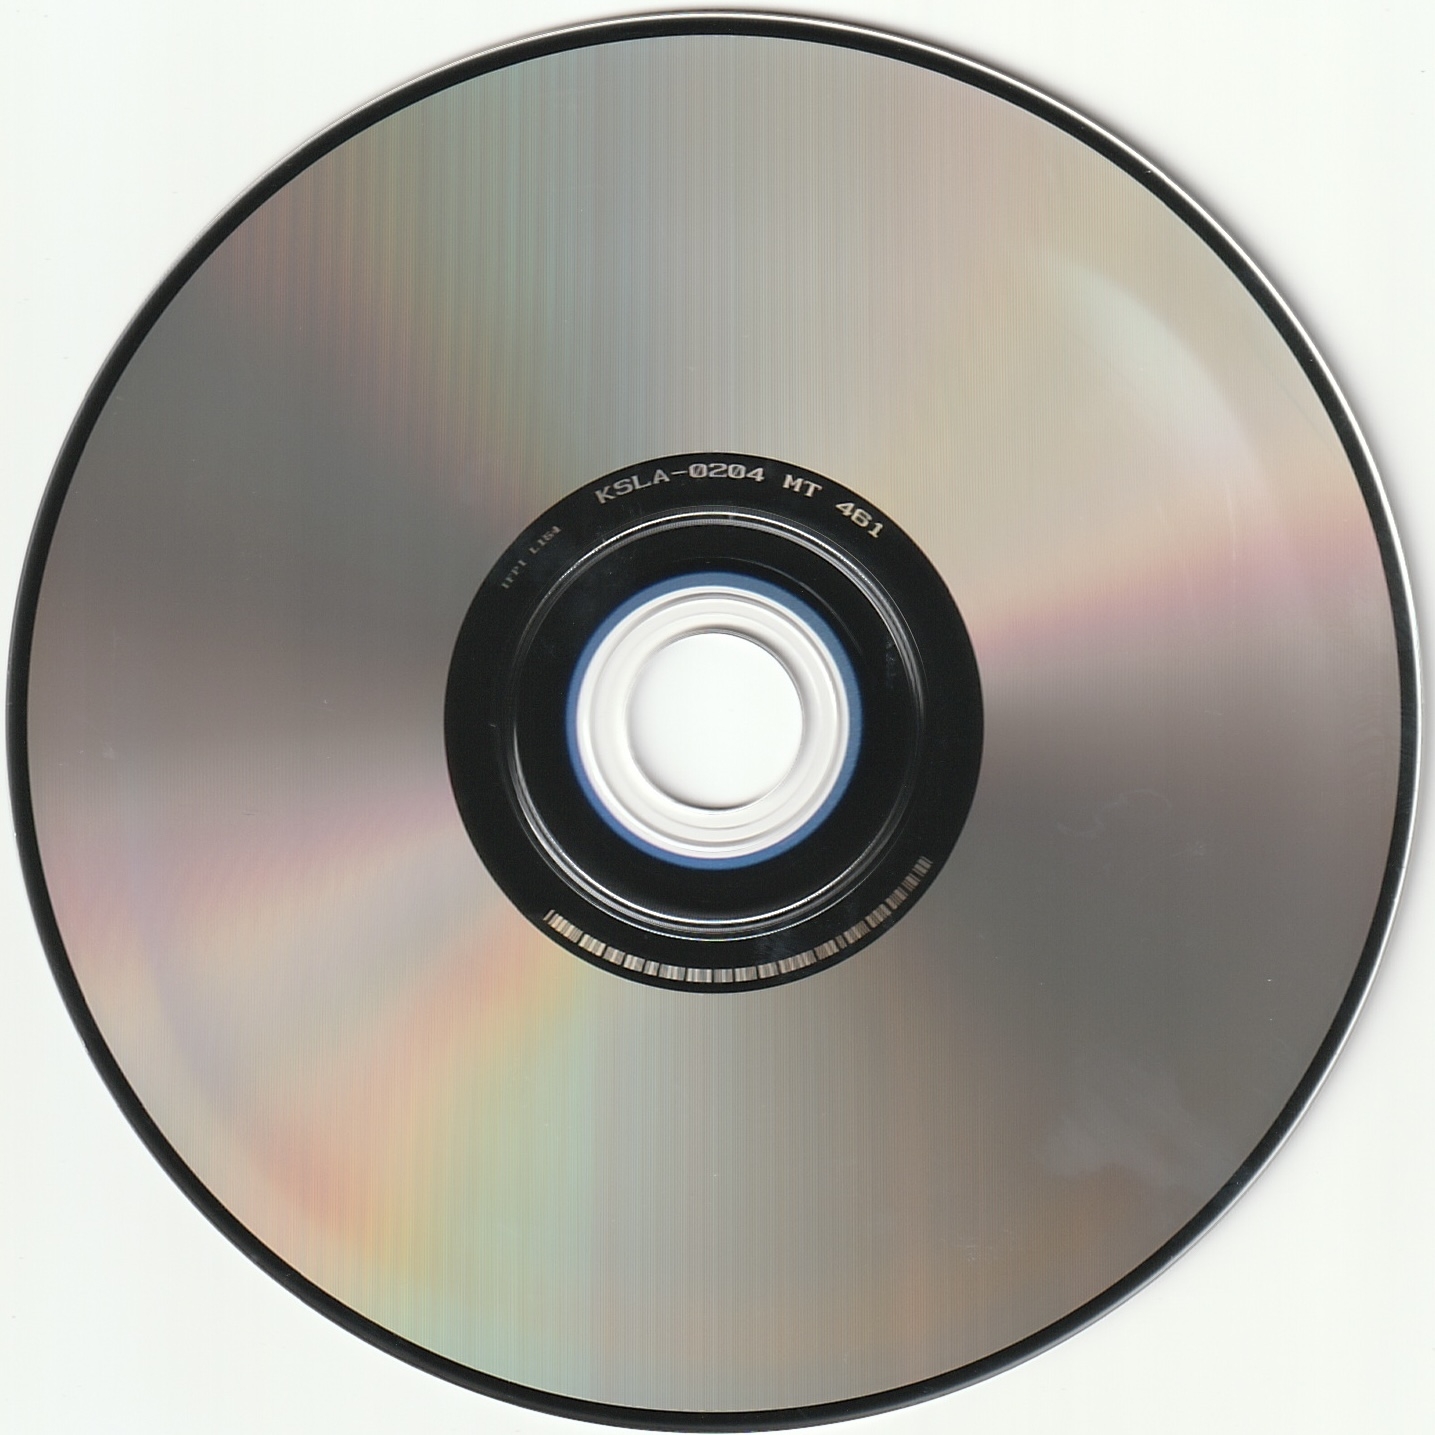 HEAVEN BURNS RED Original Sound Track Vol.1 (2022) MP3 - Download 